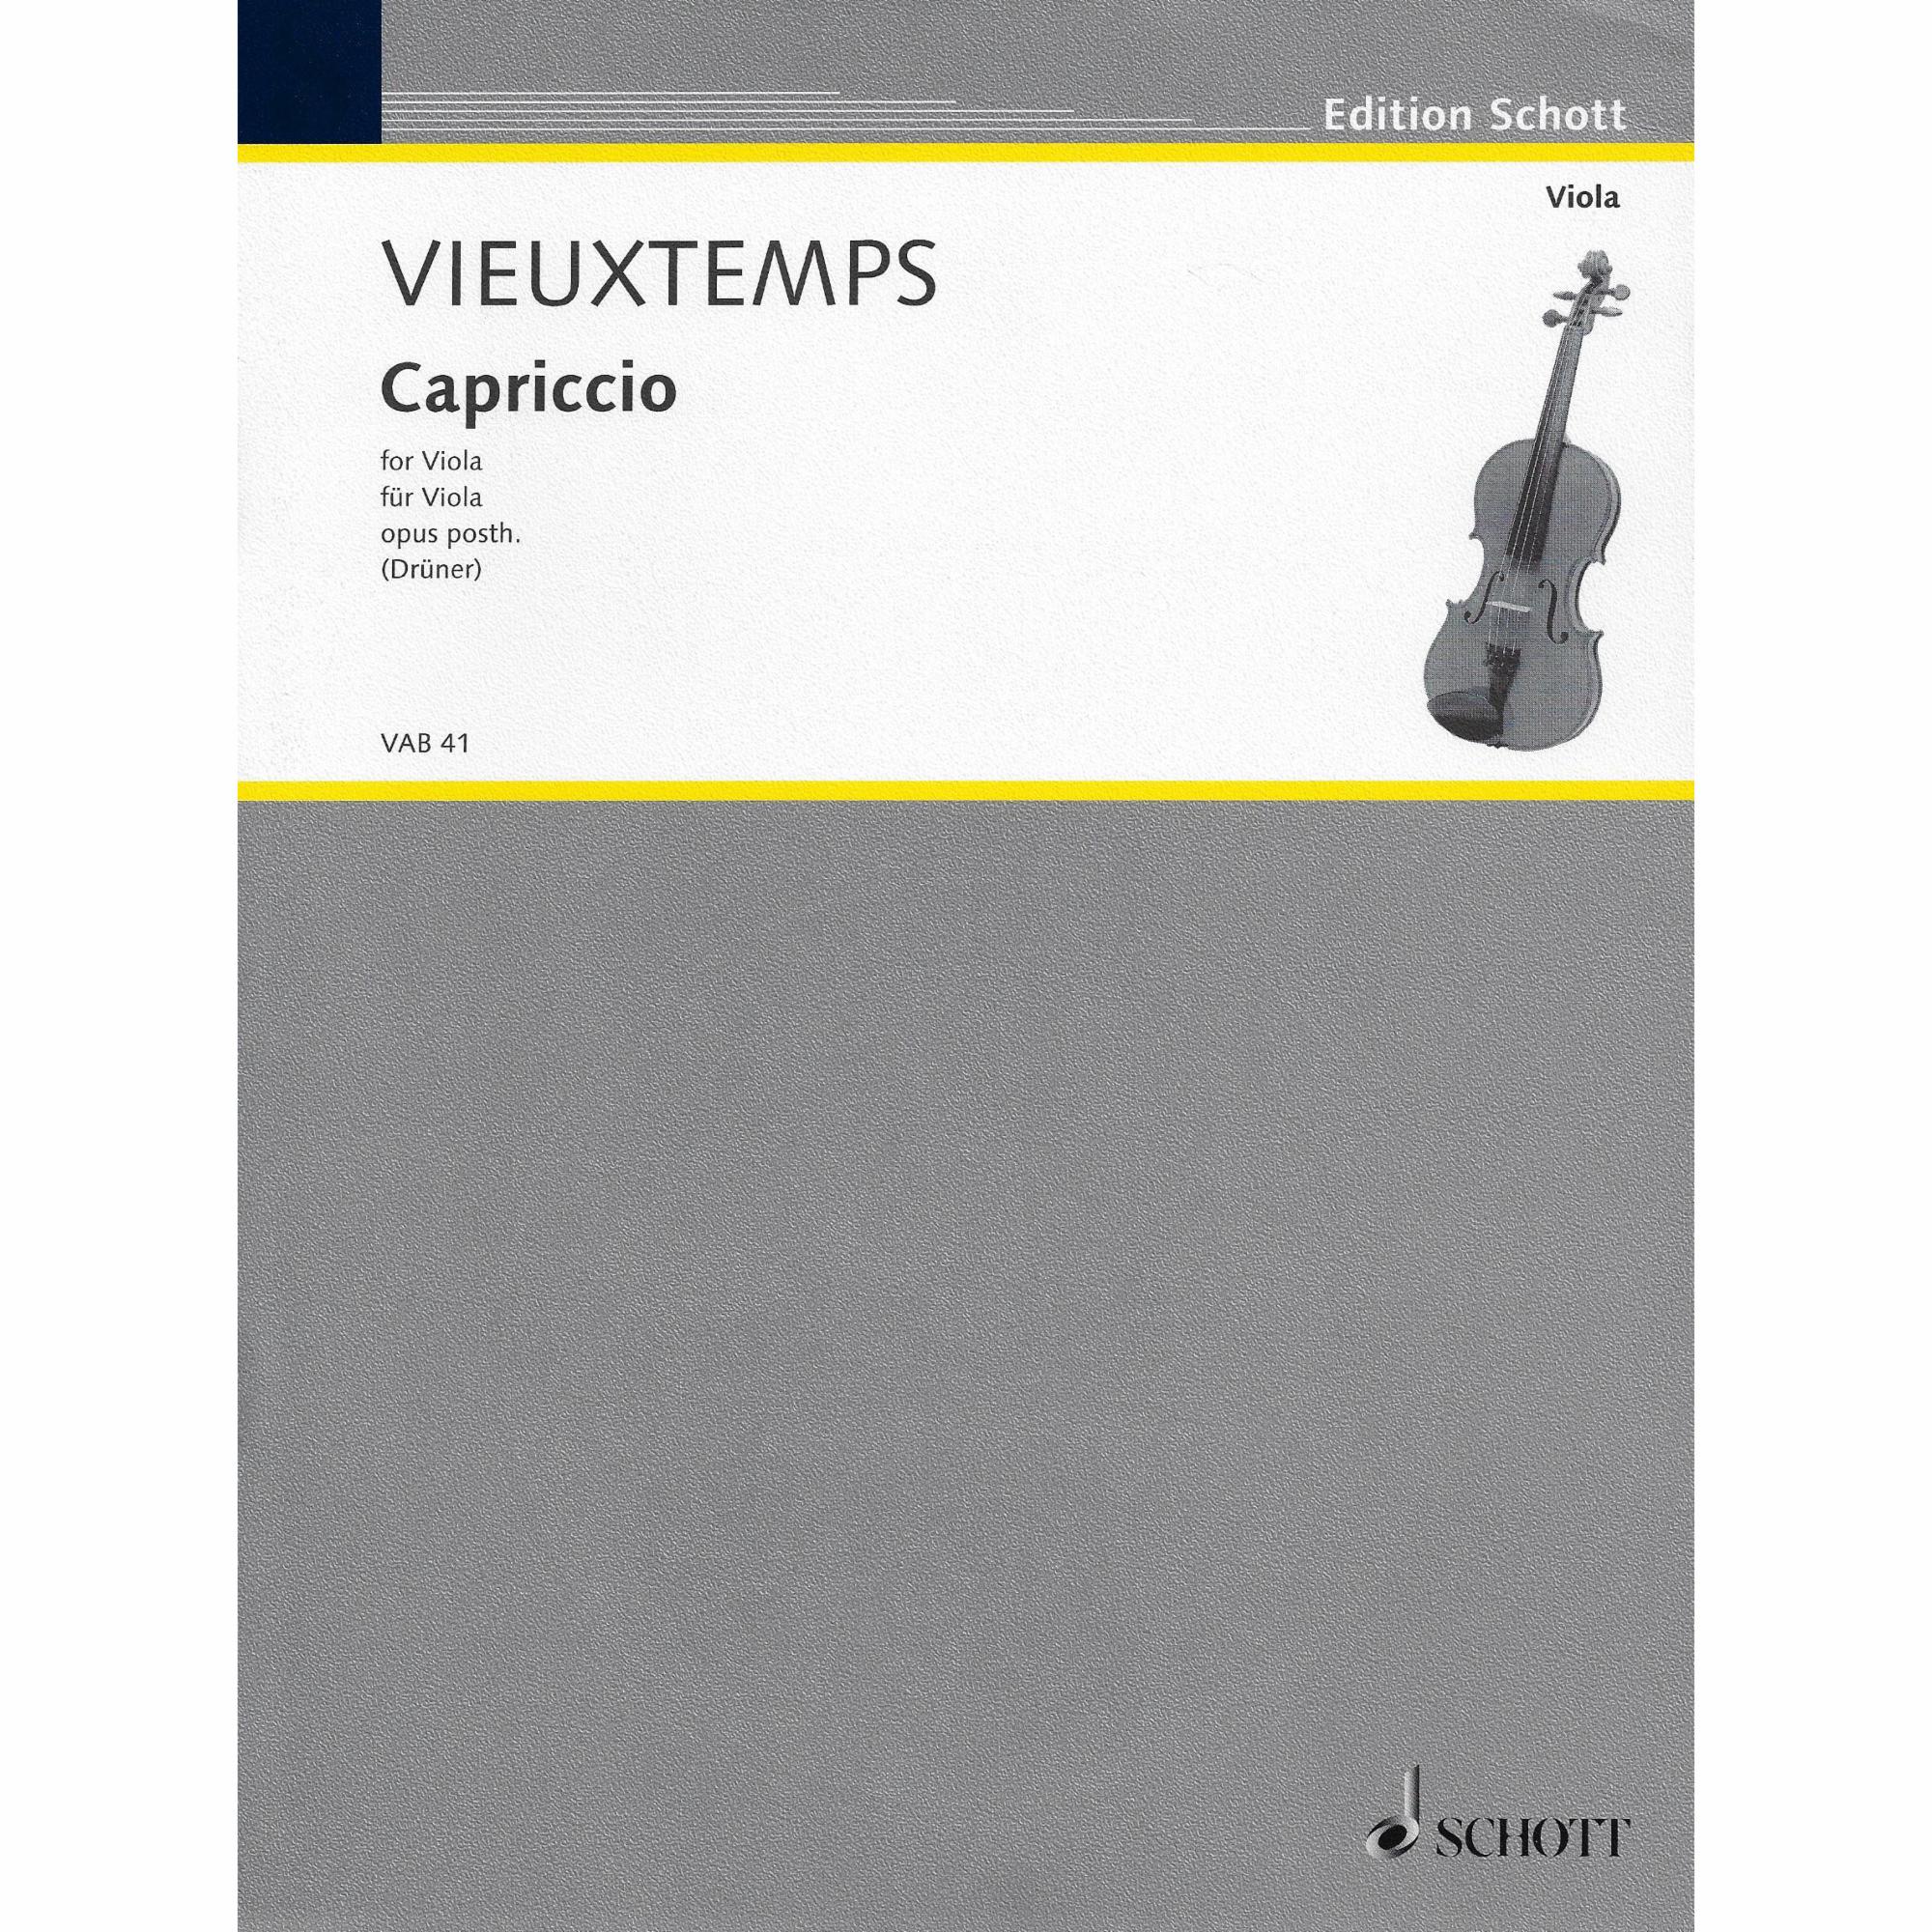 Vieuxtemps -- Capriccio, Op. post. for Solo Viola